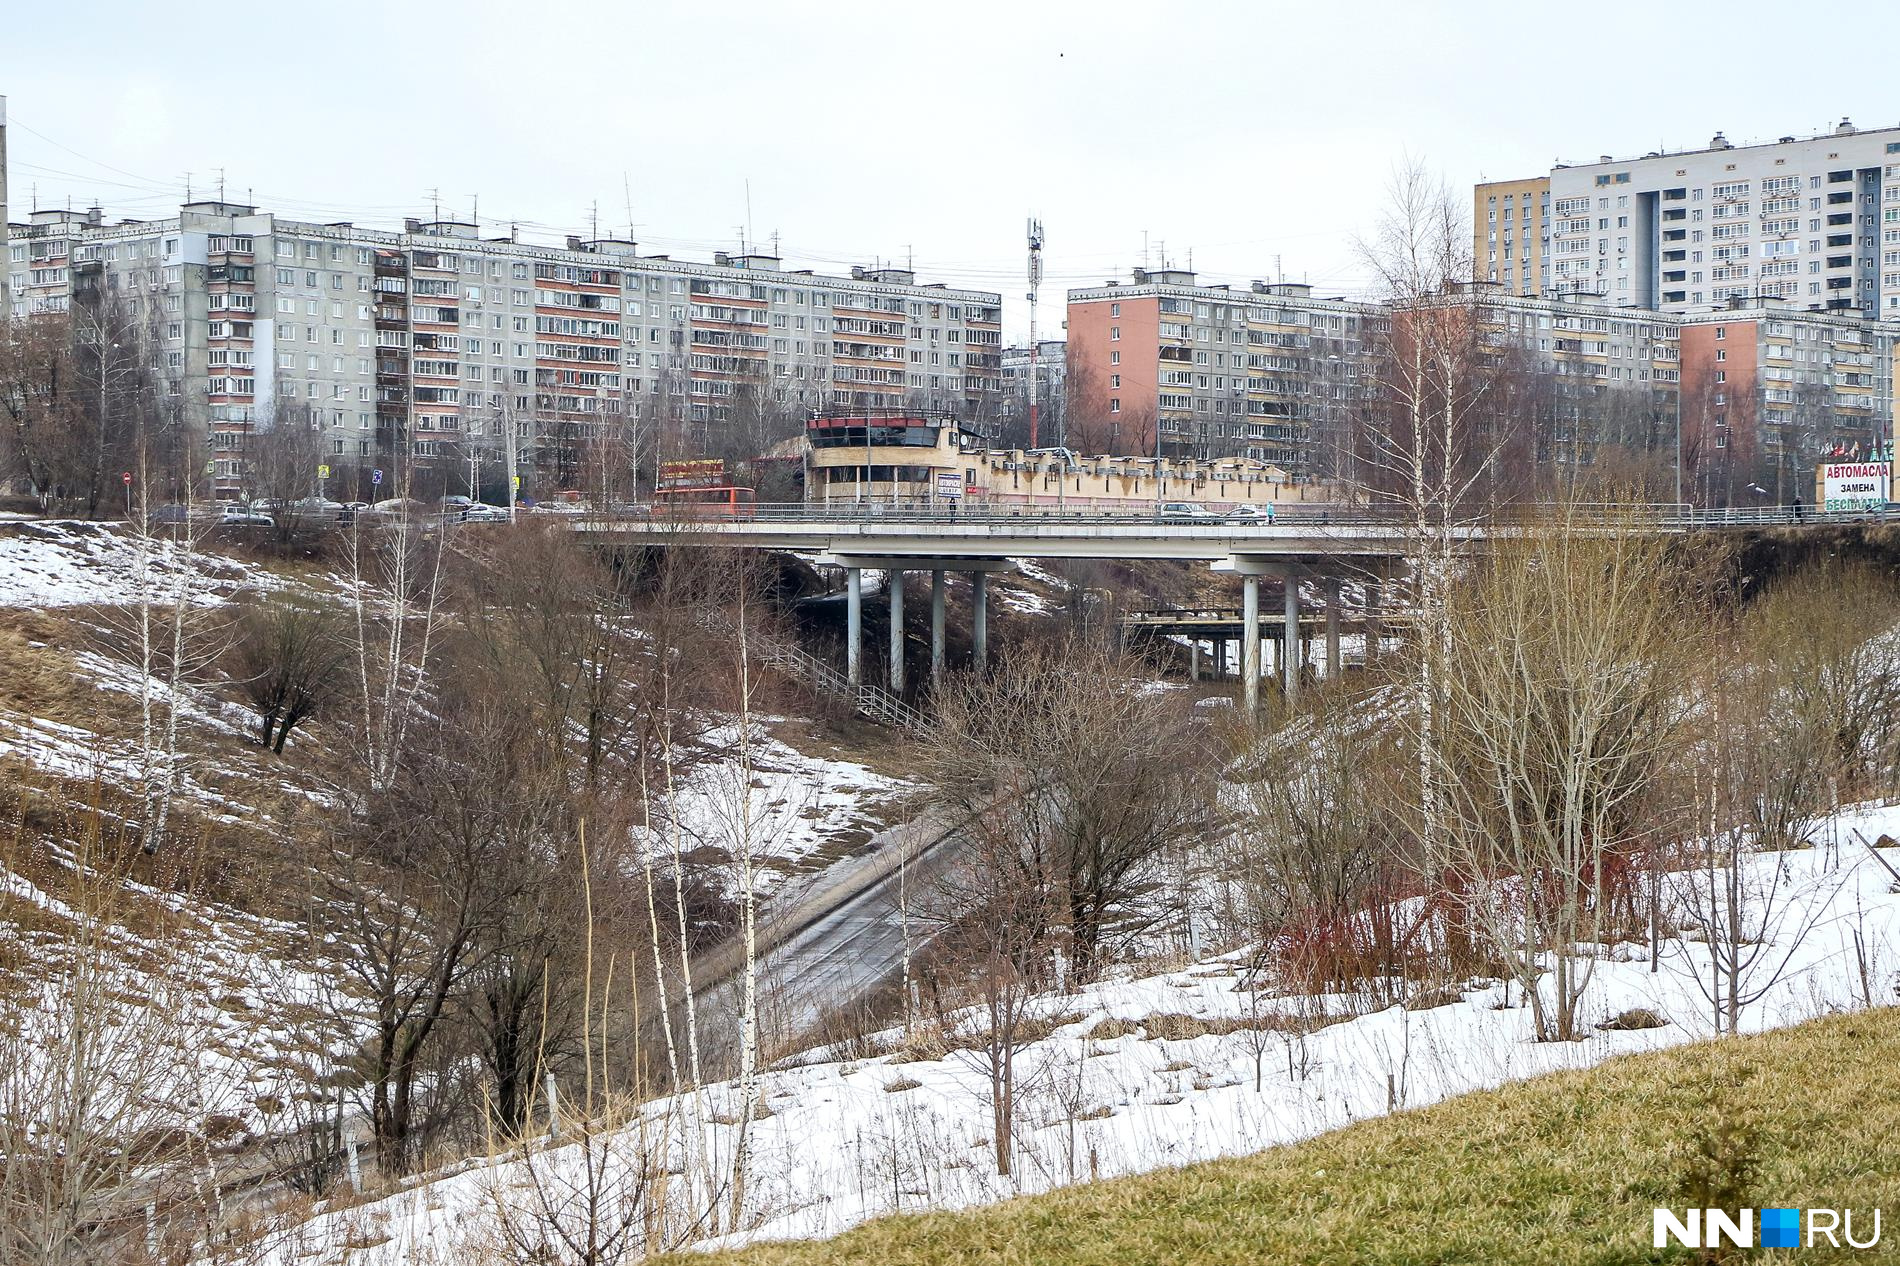 Мост над Касьяновским оврагом